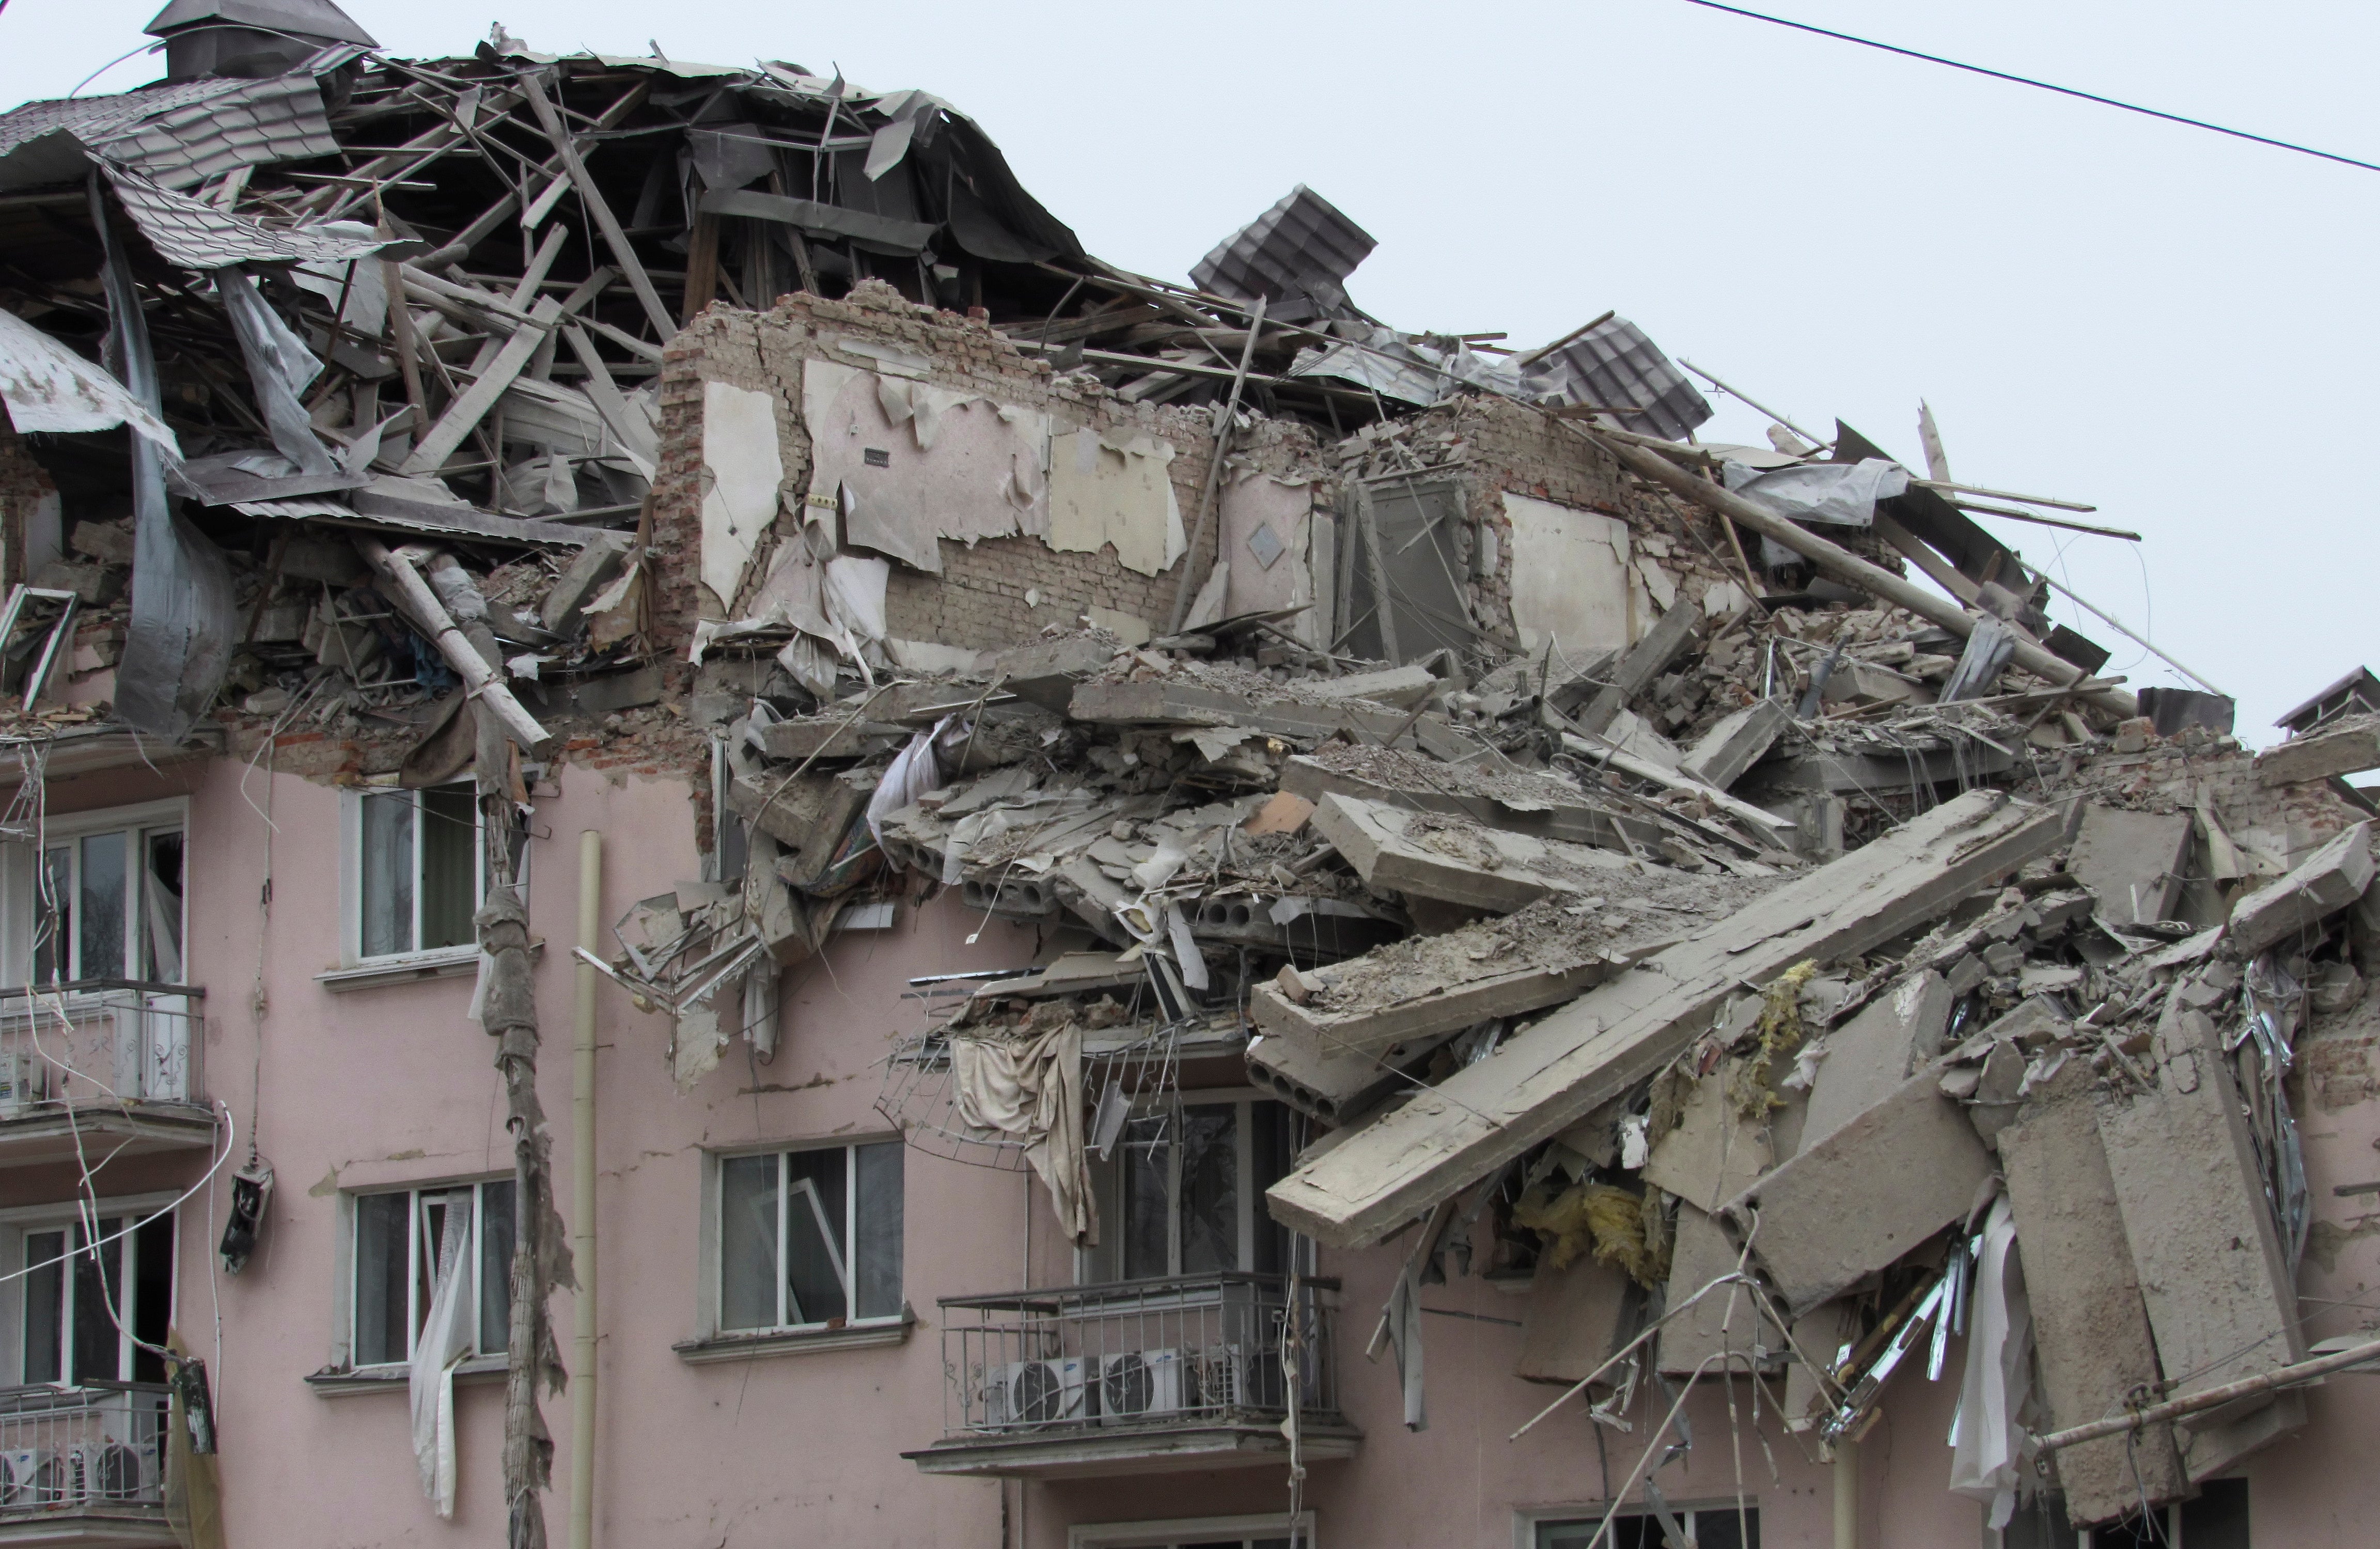 The historical building of Ukraine Hotel after recent shelling in Chernihiv, Ukraine